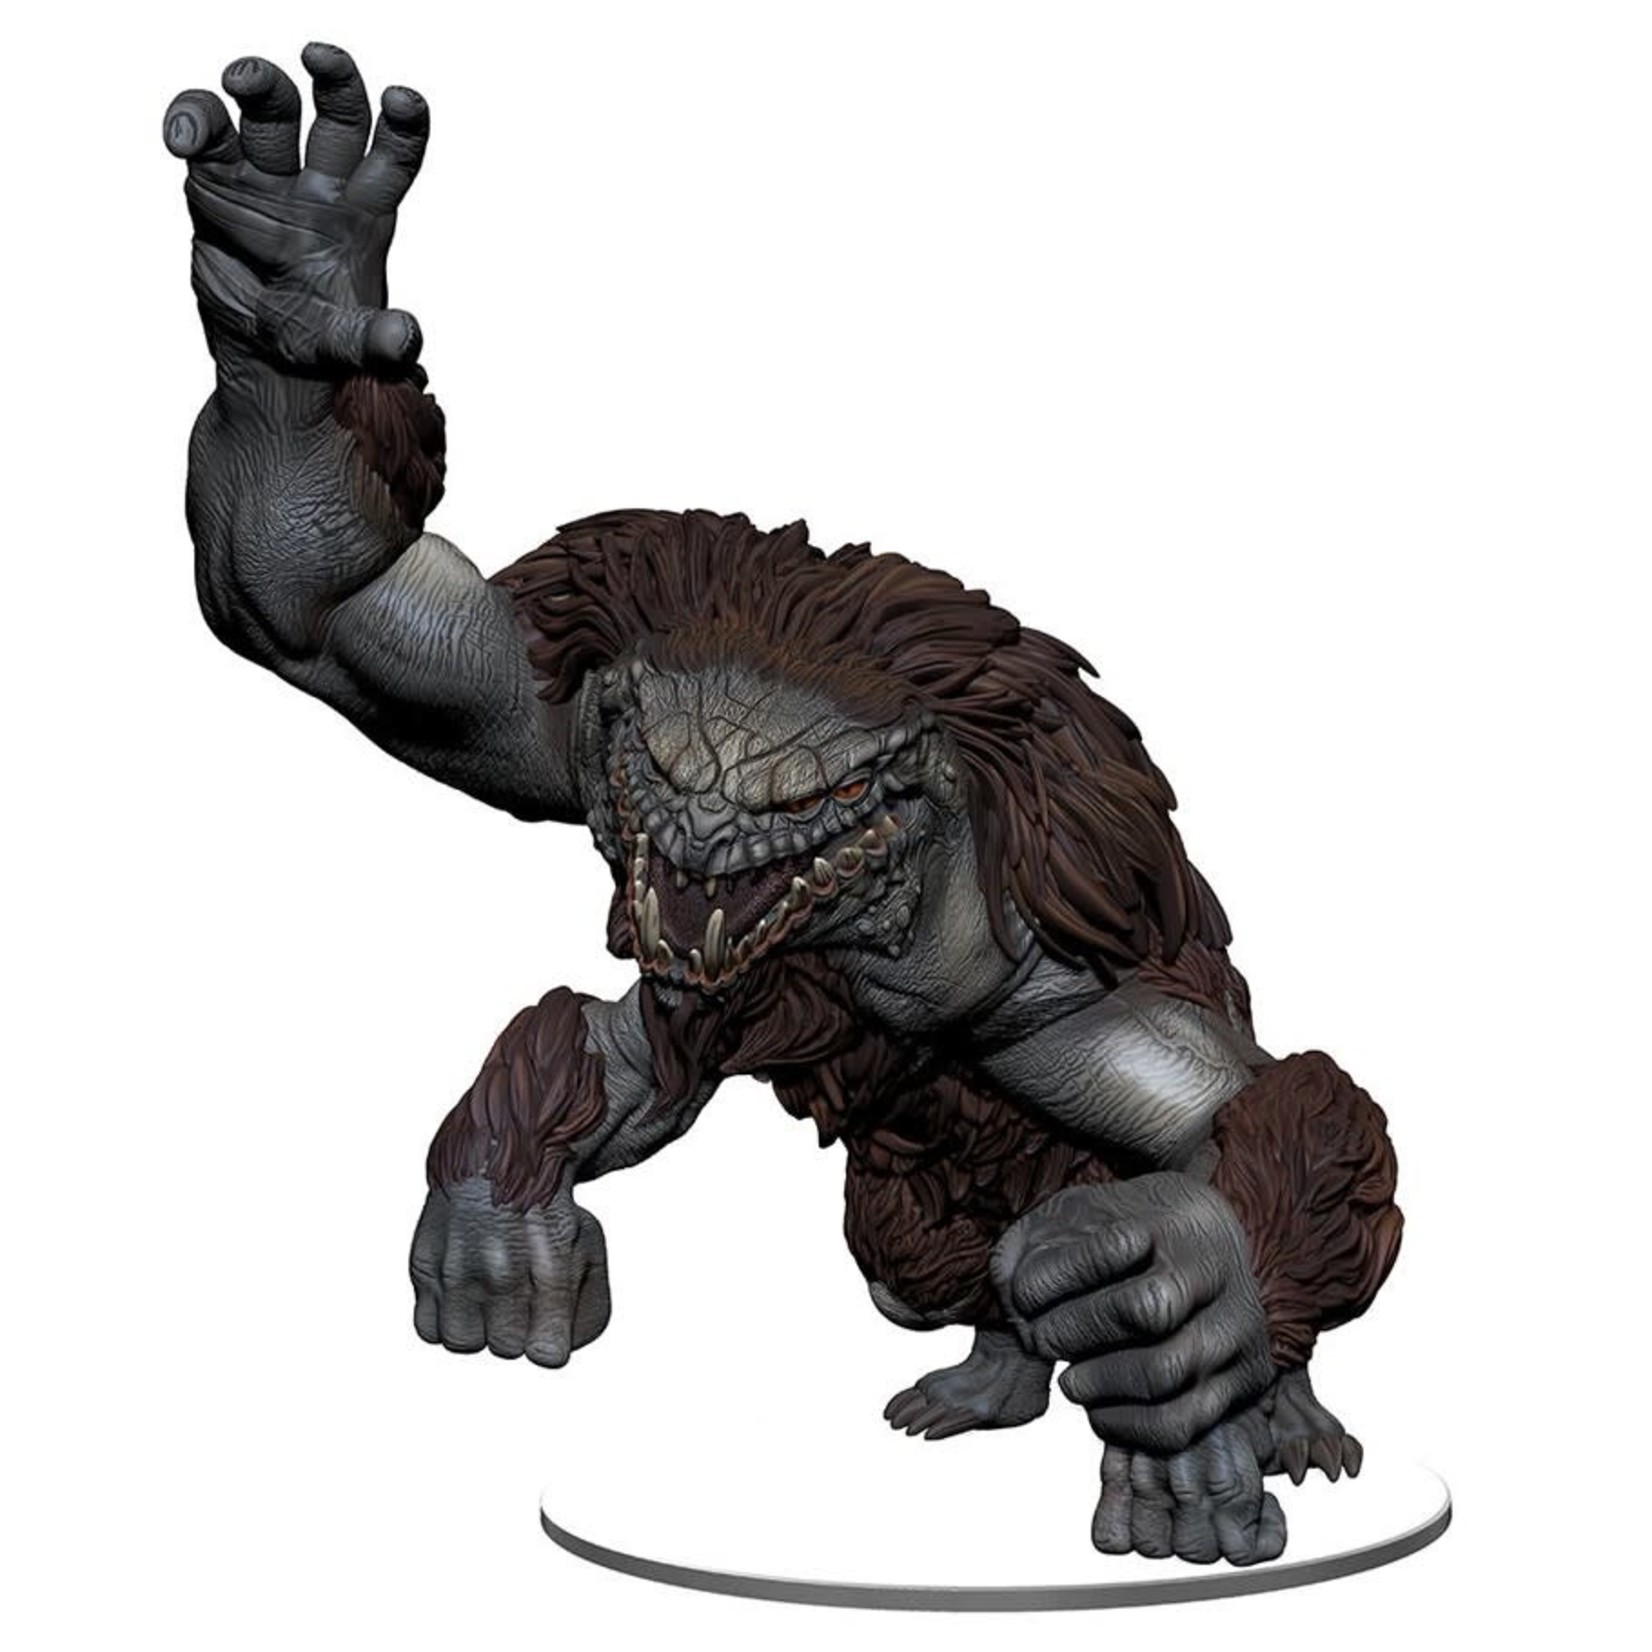 Critical Role Painted Figures: Monsters of Wildemount - Udaak Premium Figure